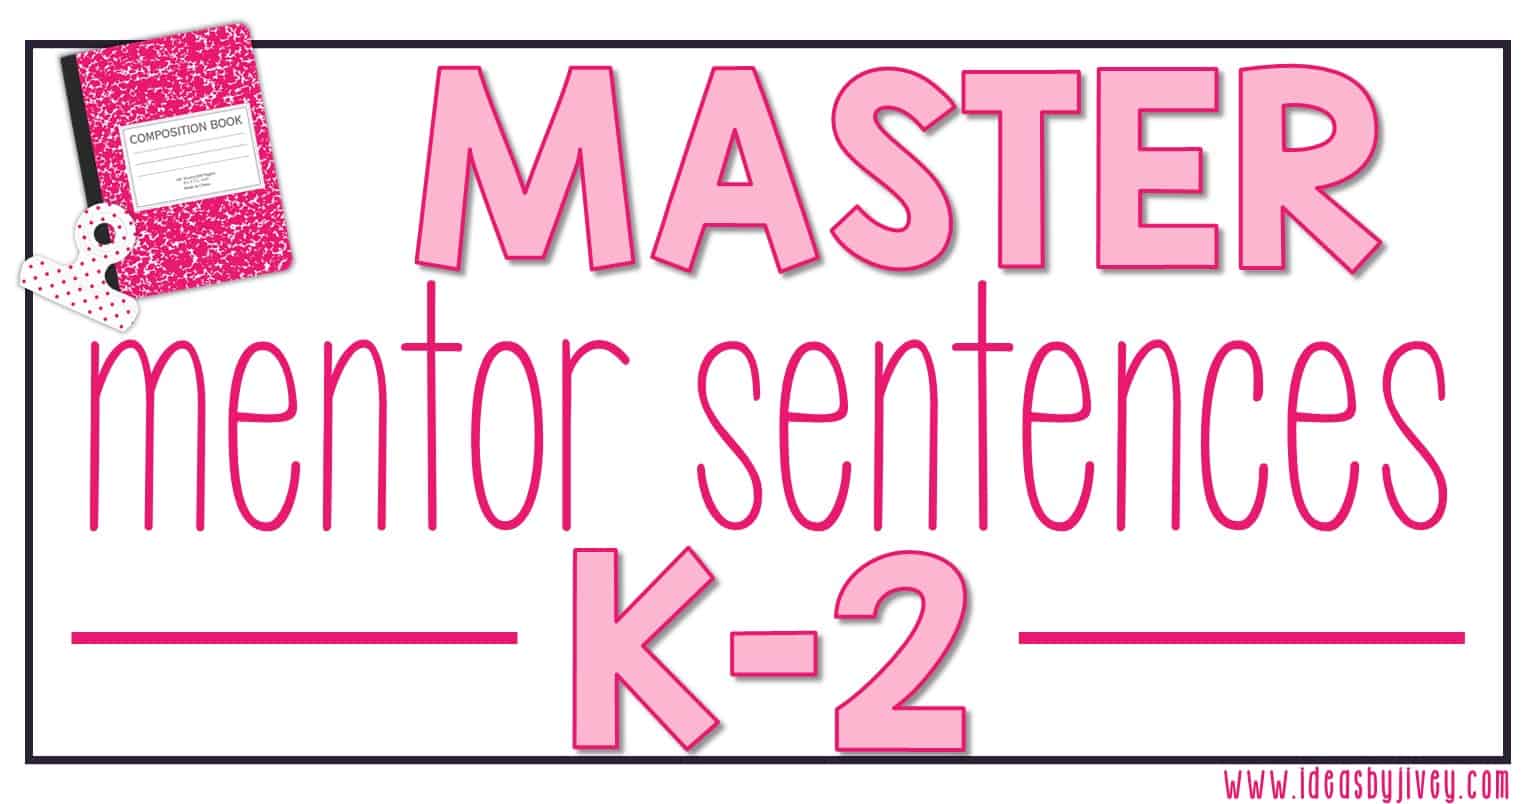 Master Mentor Sentences K-2